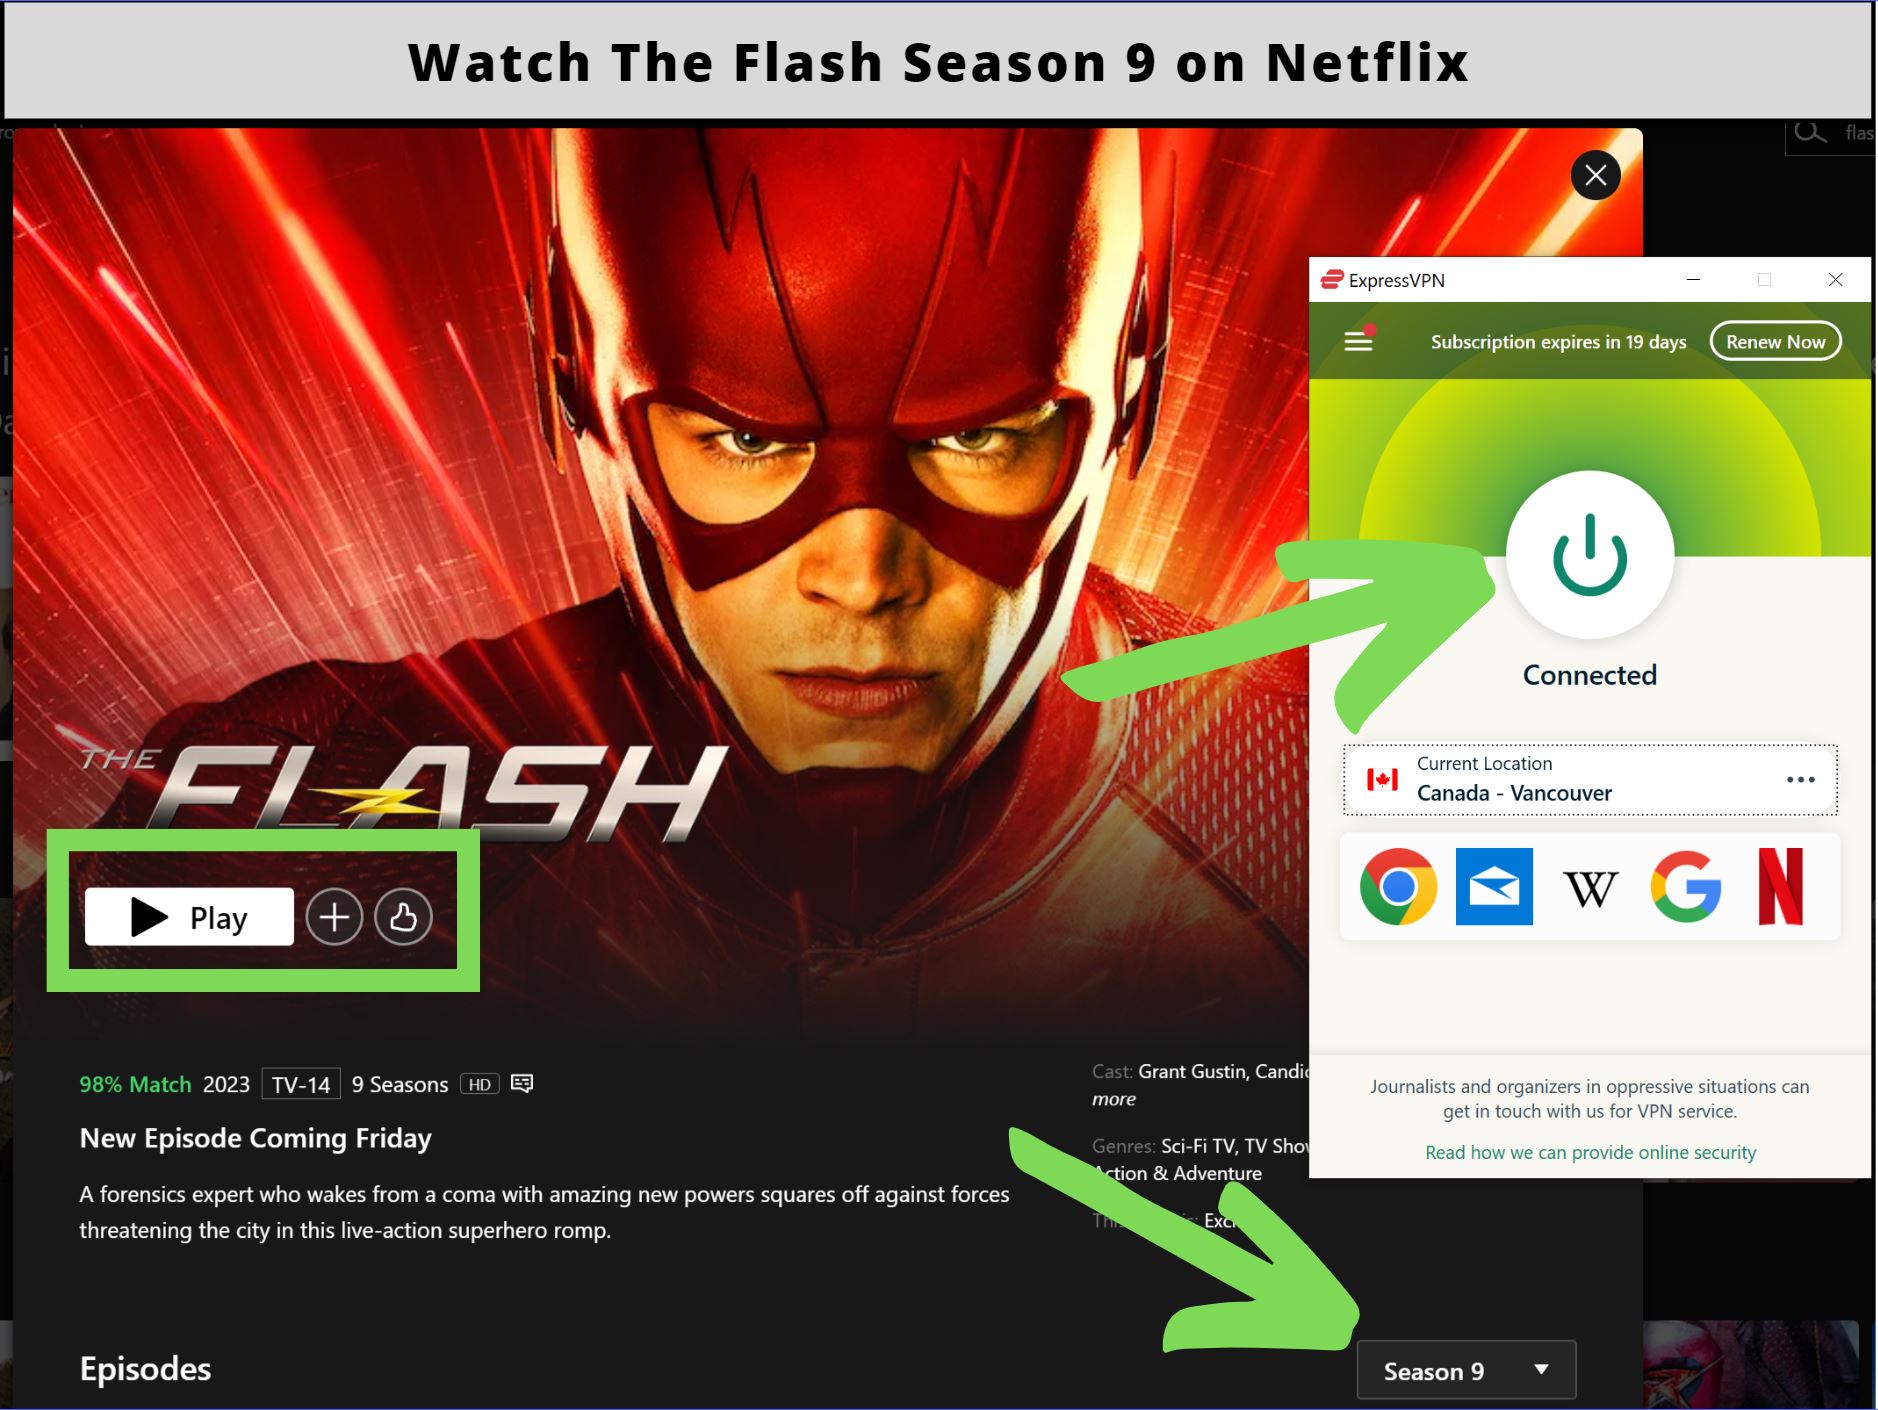 Is The Flash Season 9 on Netflix?